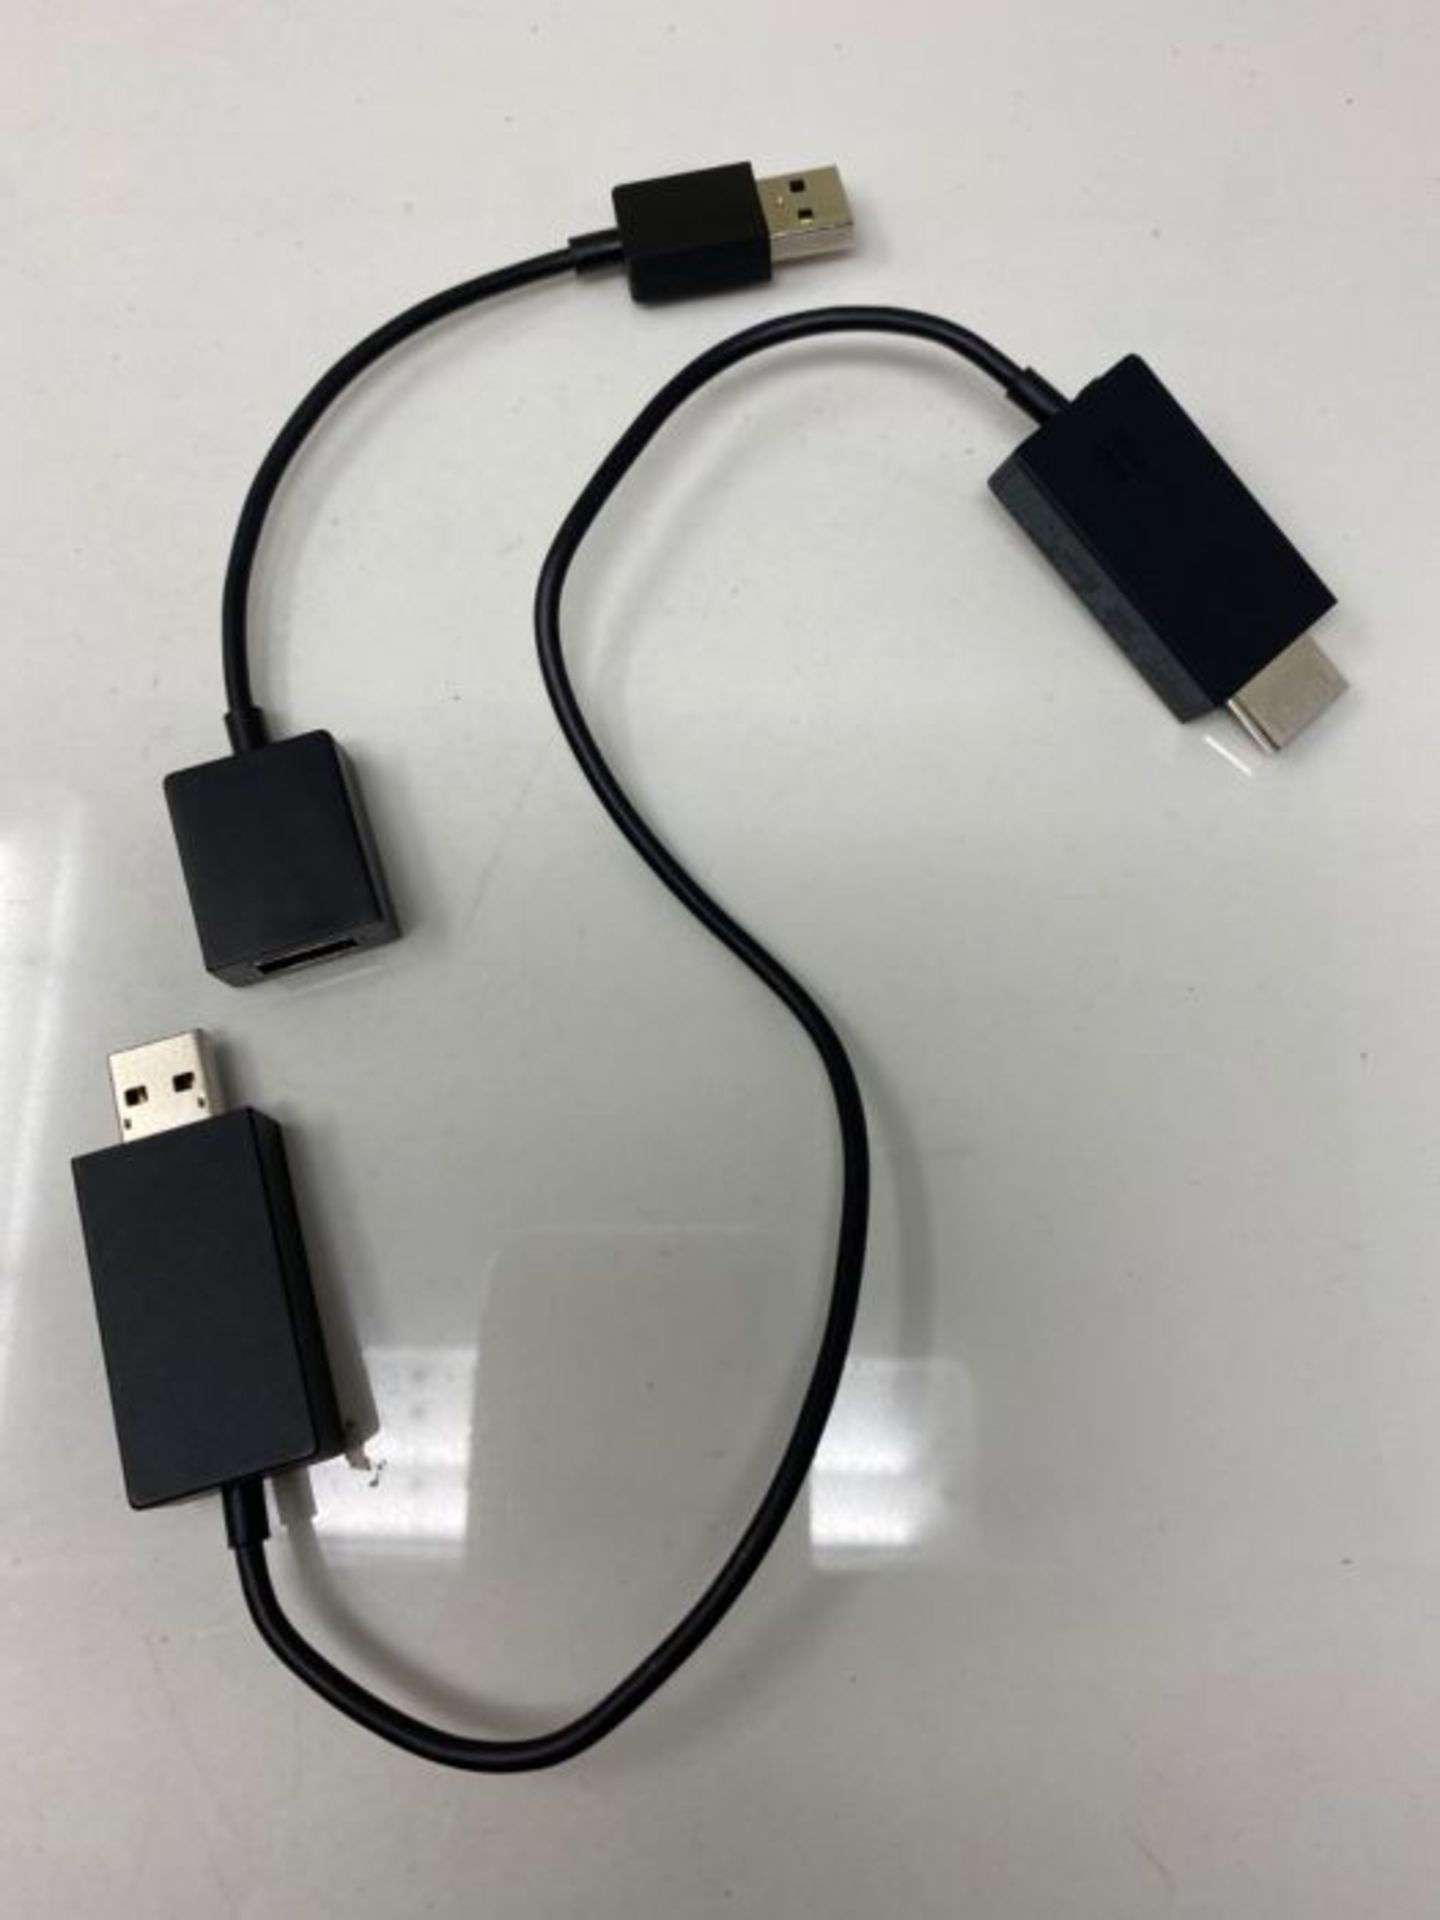 Microsoft Wireless Display V2 Adapter - Black - Image 2 of 2